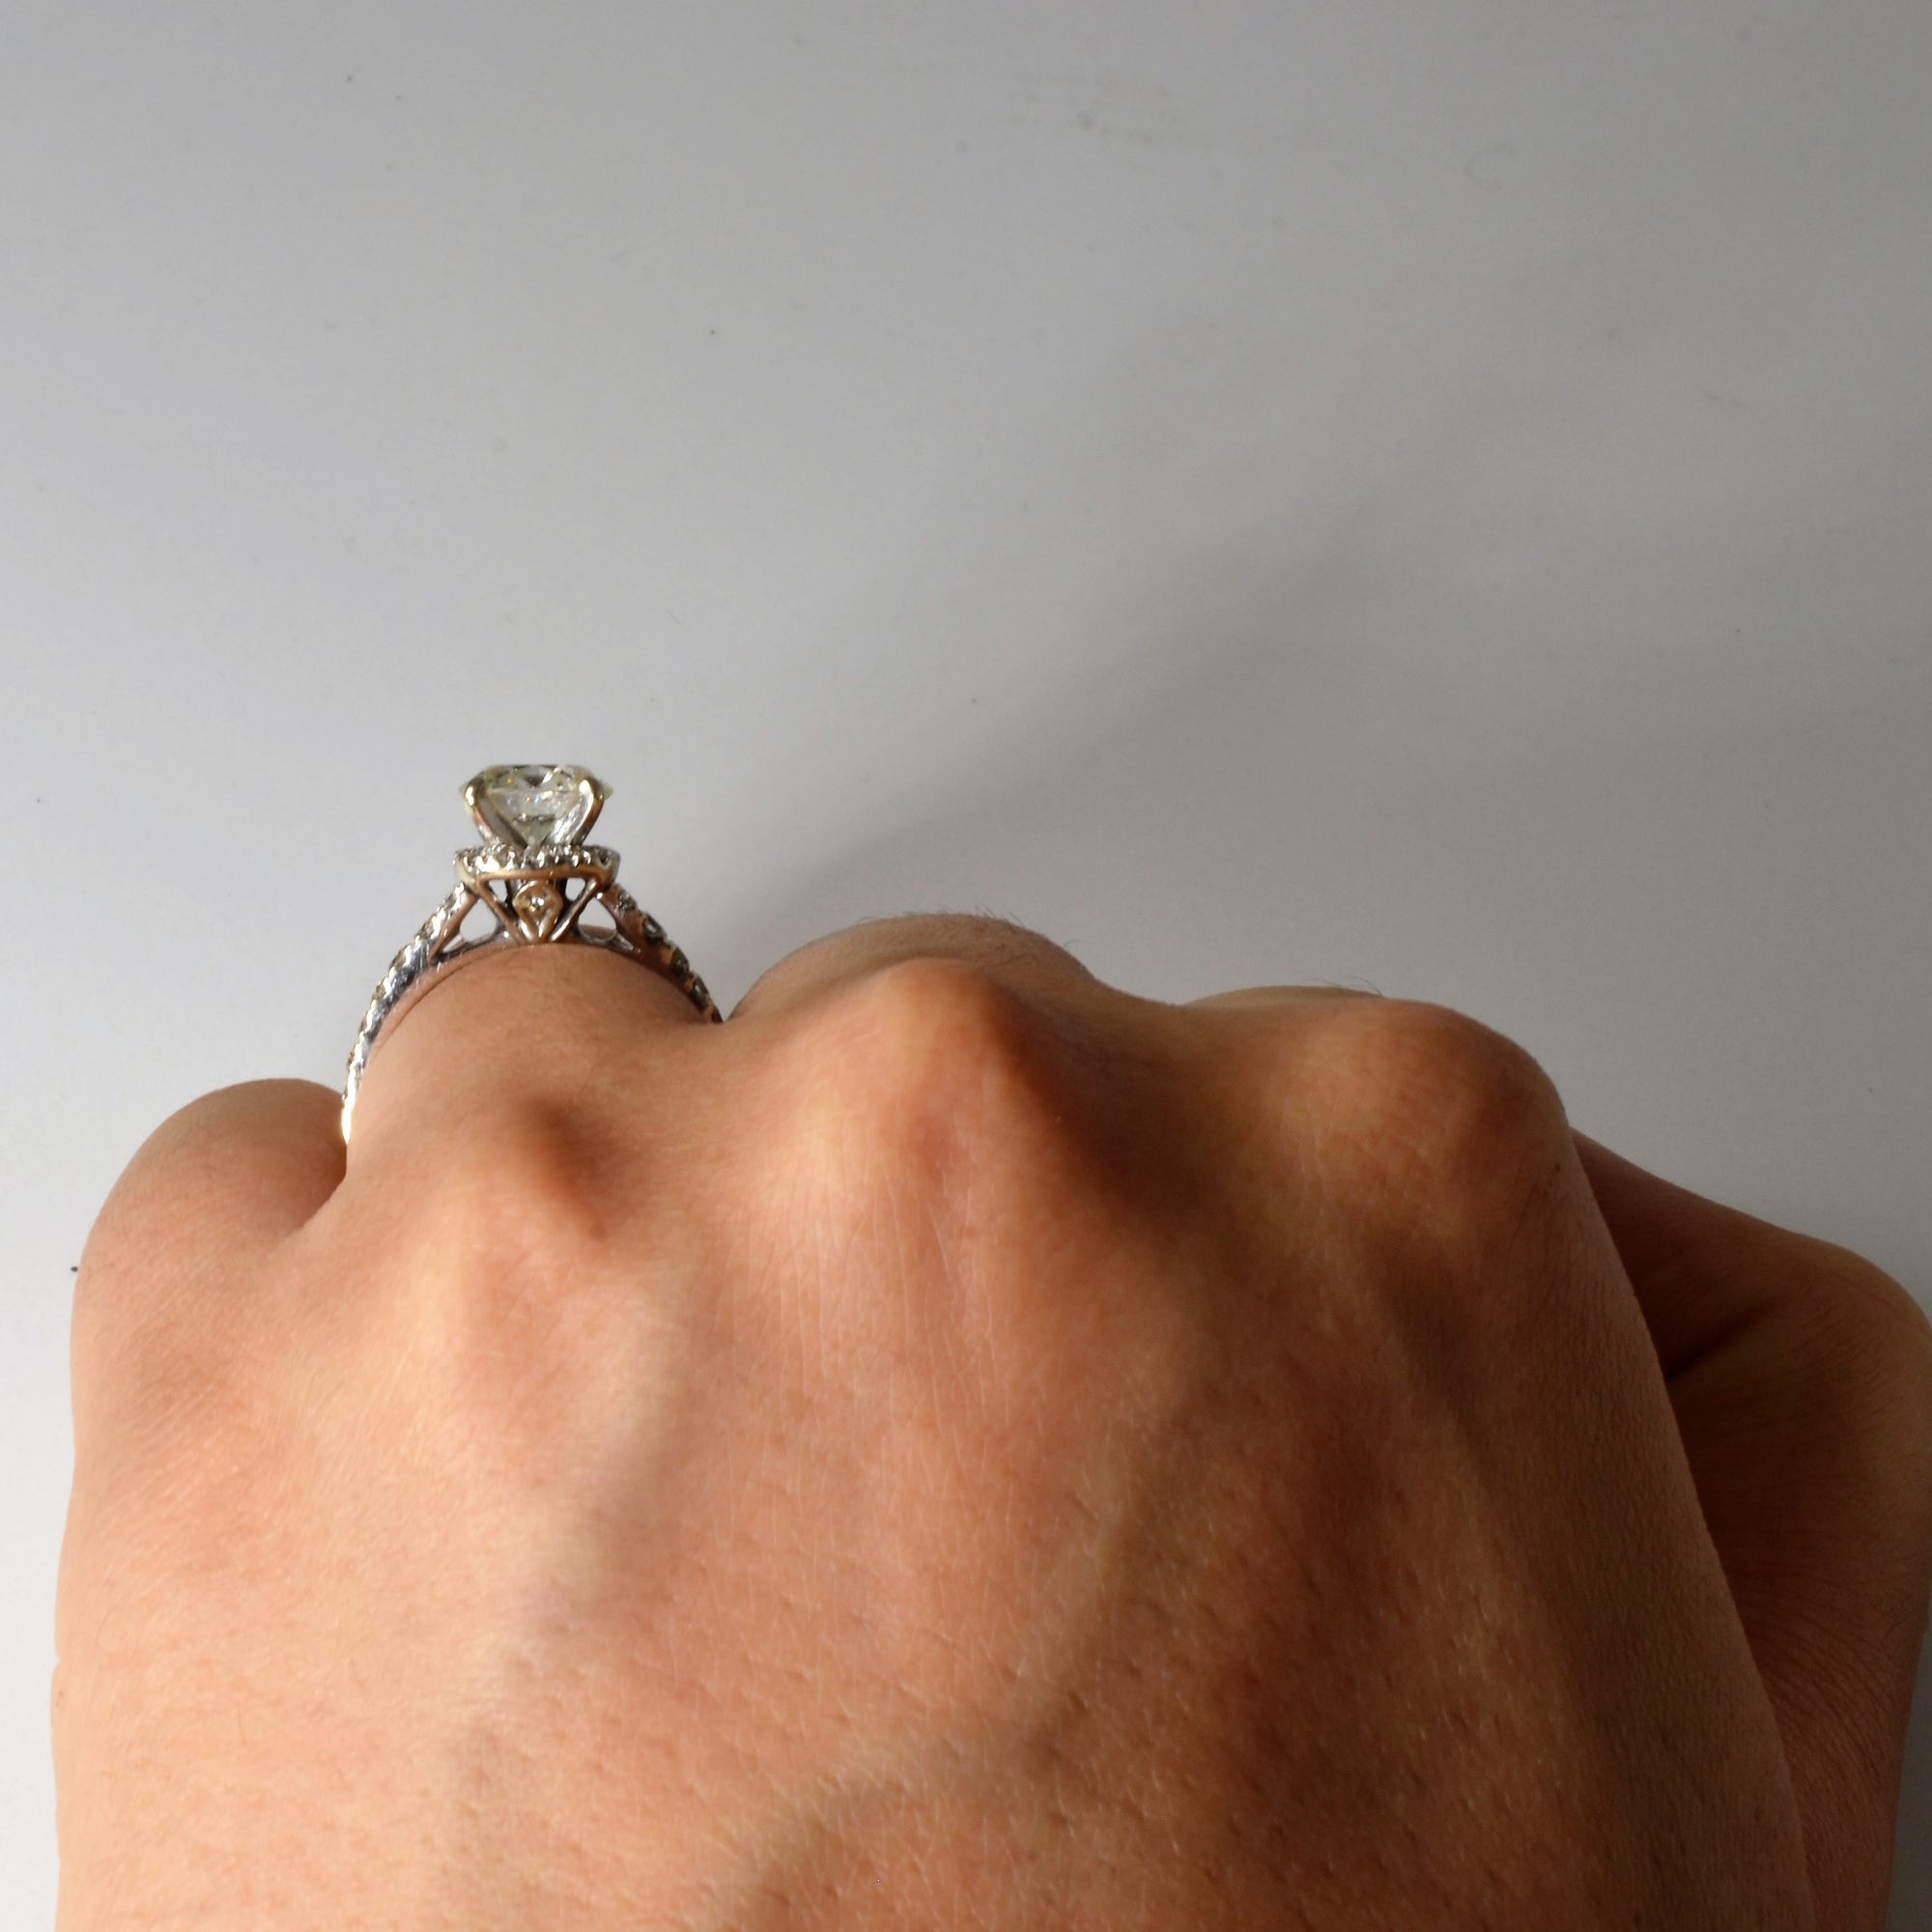 Lowered Halo Diamond Engagement Ring | 2.21ctw | SZ 5.75 |